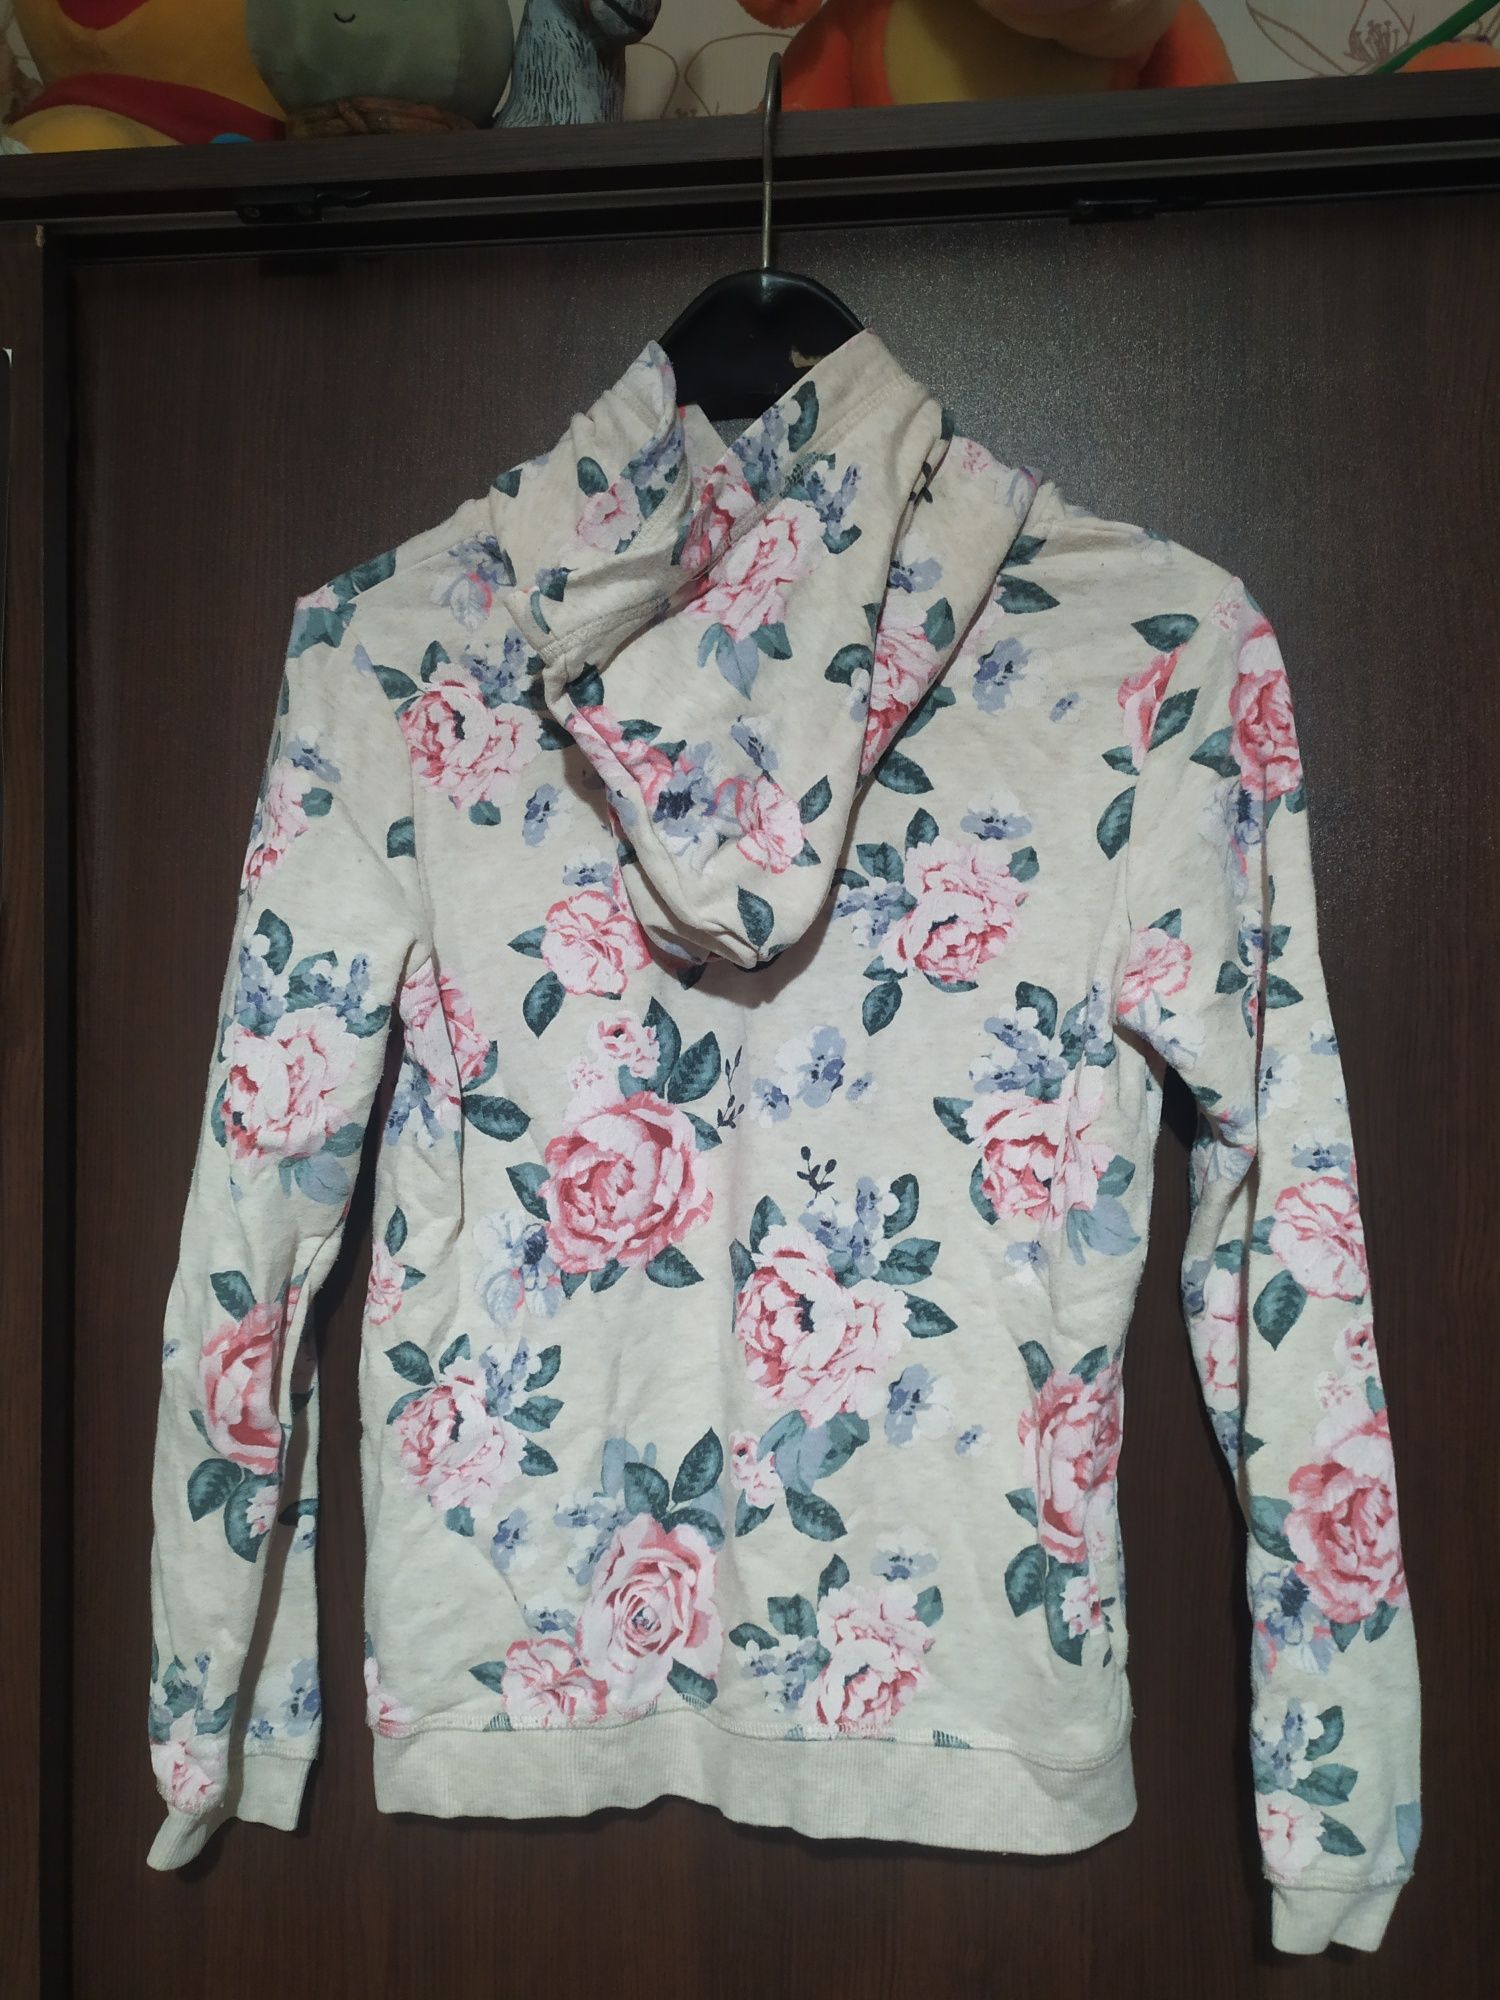 Пуловер на Hrry Potter, Суичъри и блуза на H&M